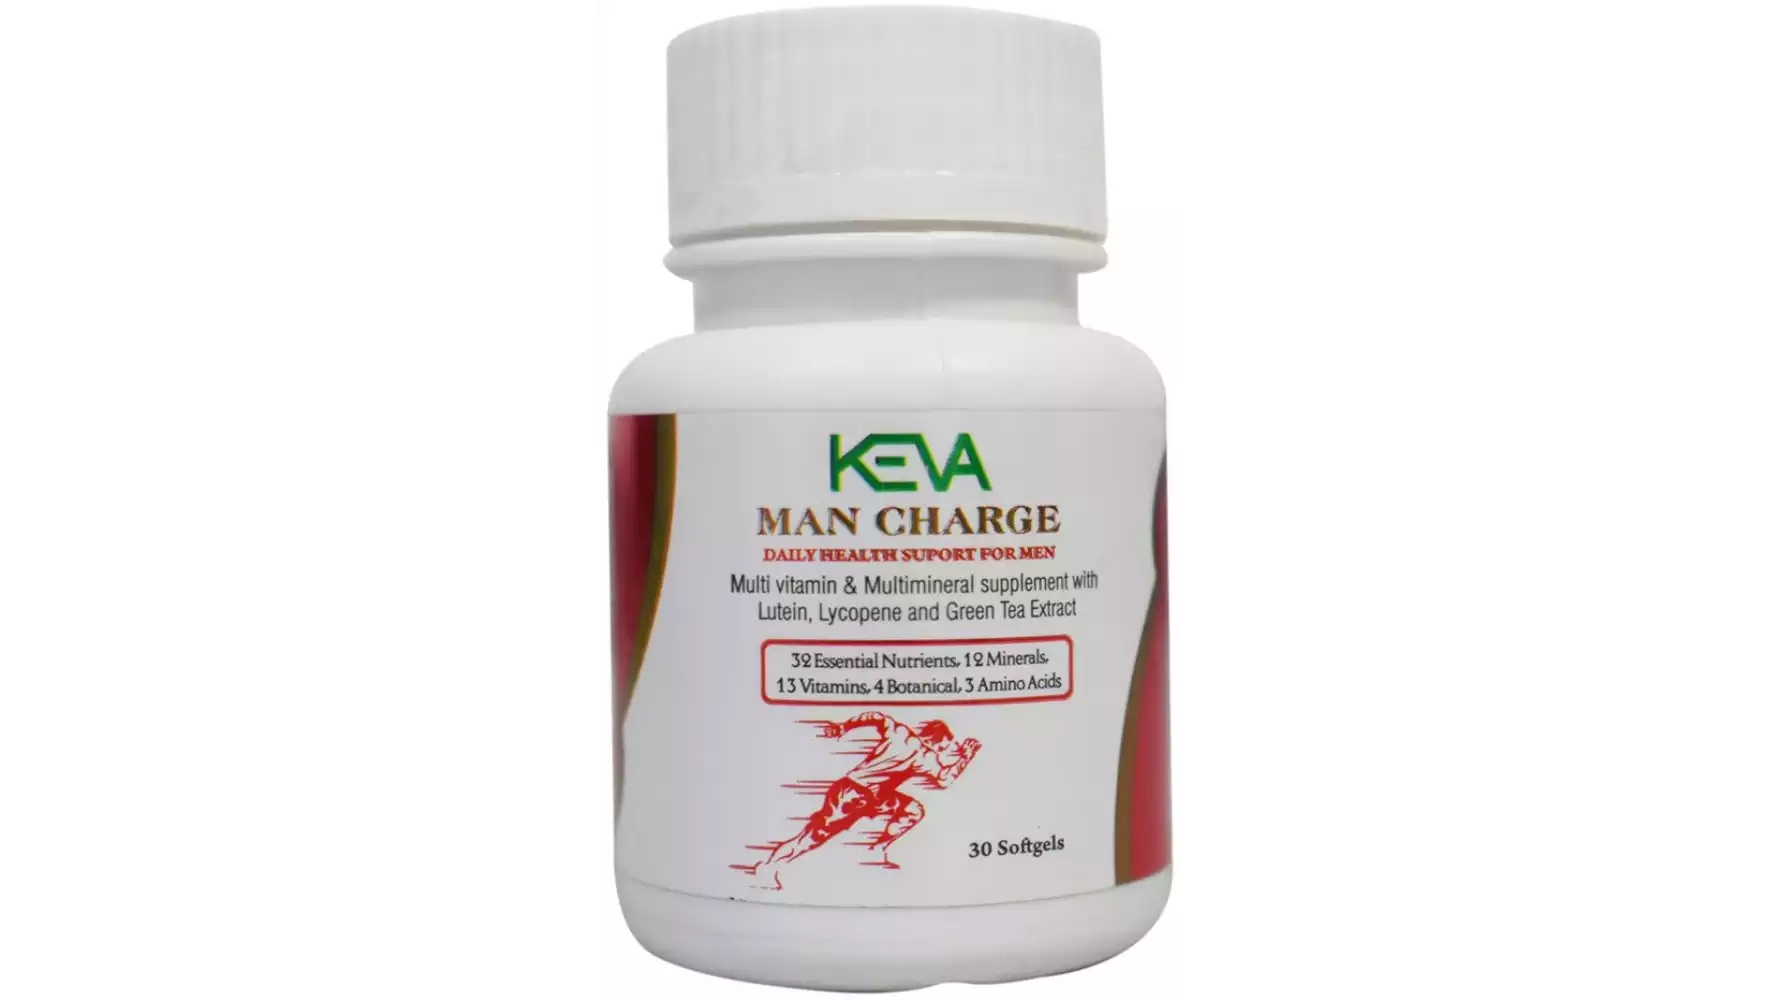 Keva Man Charge Multi-Vitamin And Multi-Mineral Supplement Capsule (30caps)